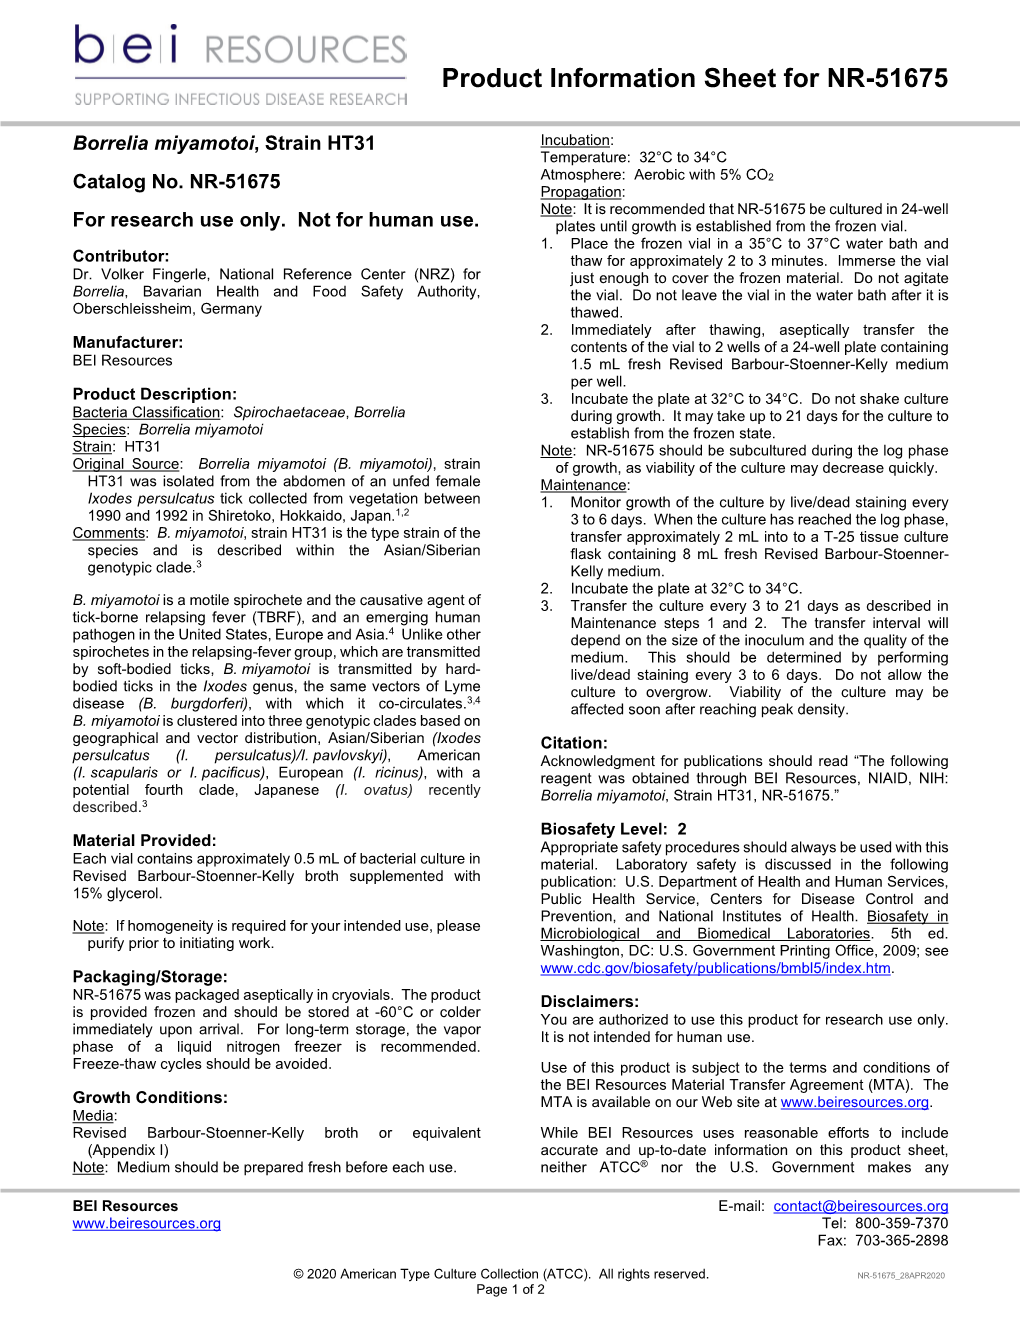 BEI Resources Product Information Sheet Catalog No. NR-51675 Borrelia Miyamotoi, Strain HT31